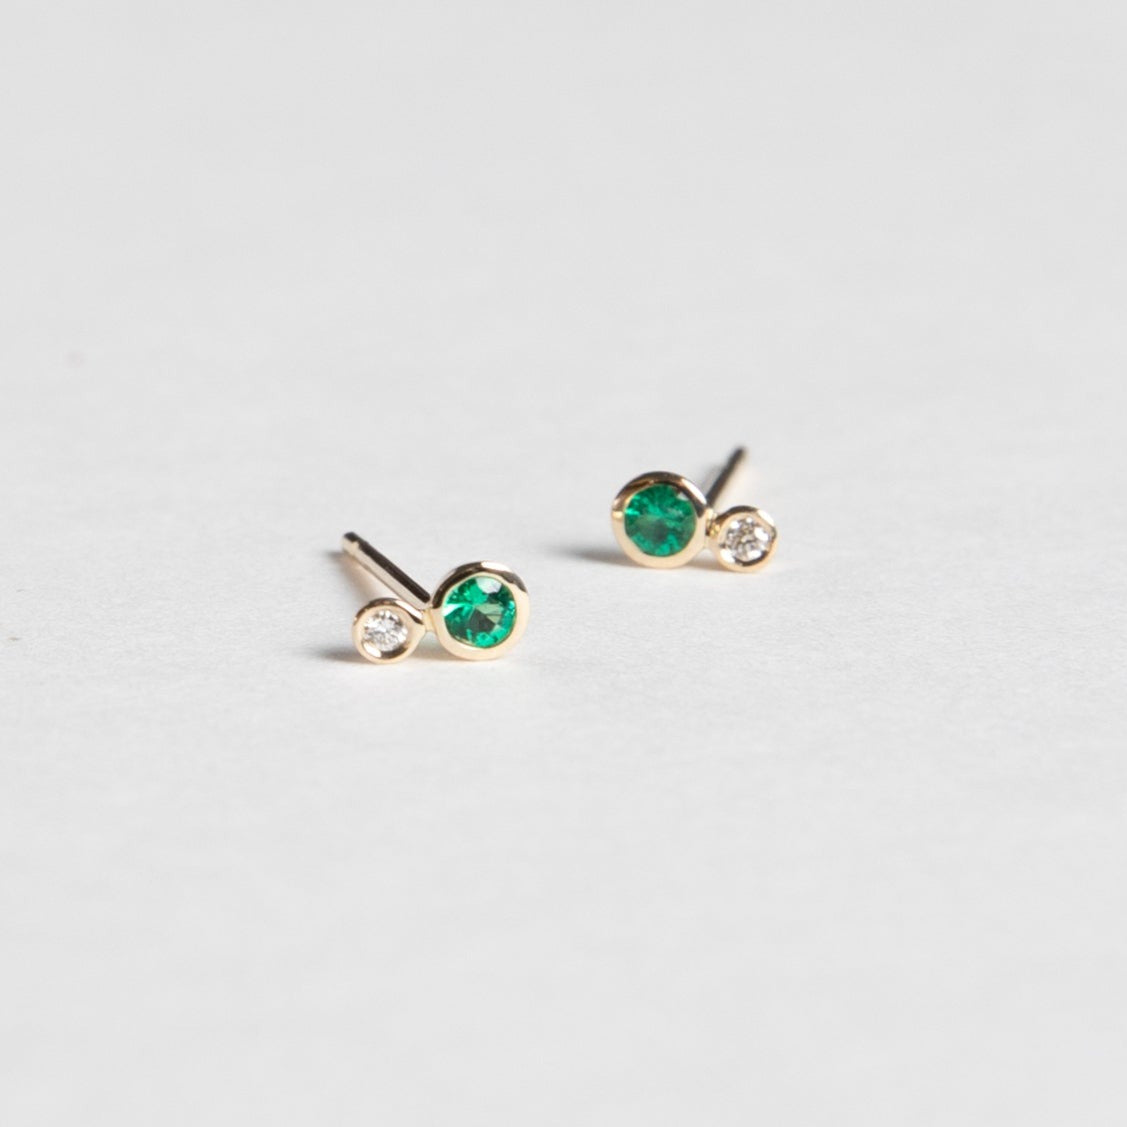 Kiki Minimalist Earrings in 14k Gold set with Emeralds by SHW Fine Jewelry NYC